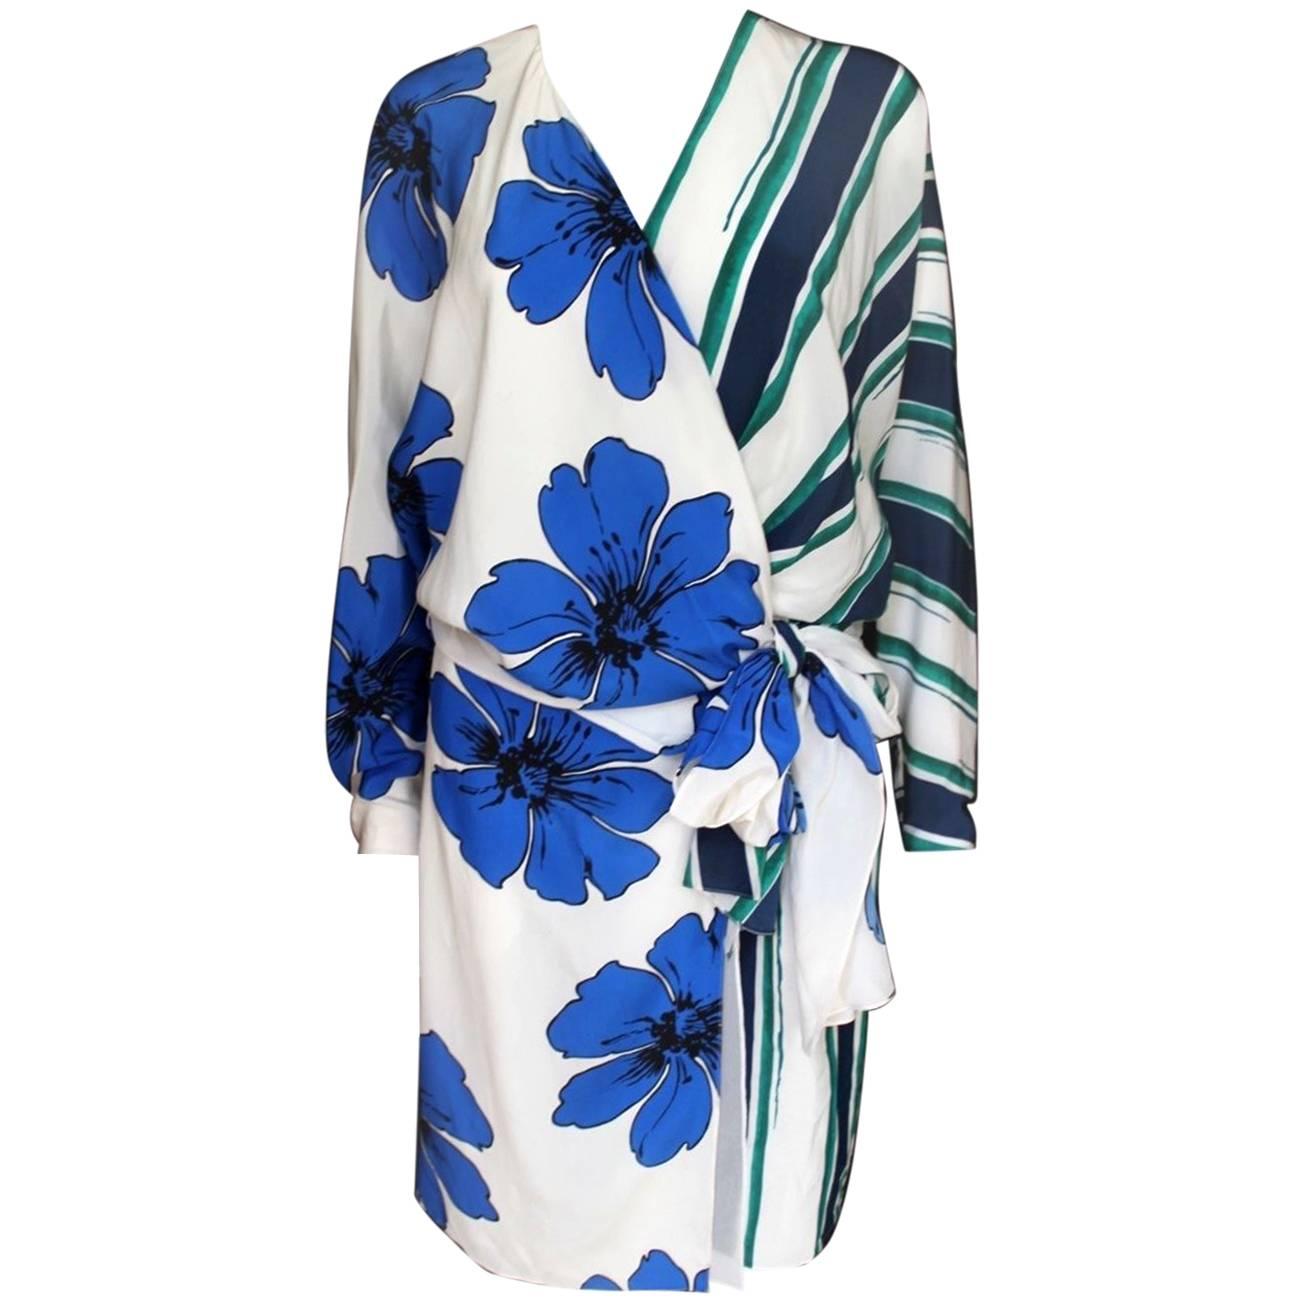 New Chloe Resort 2015 White Striped Floral Dress F 42 uk 12-14 For Sale ...